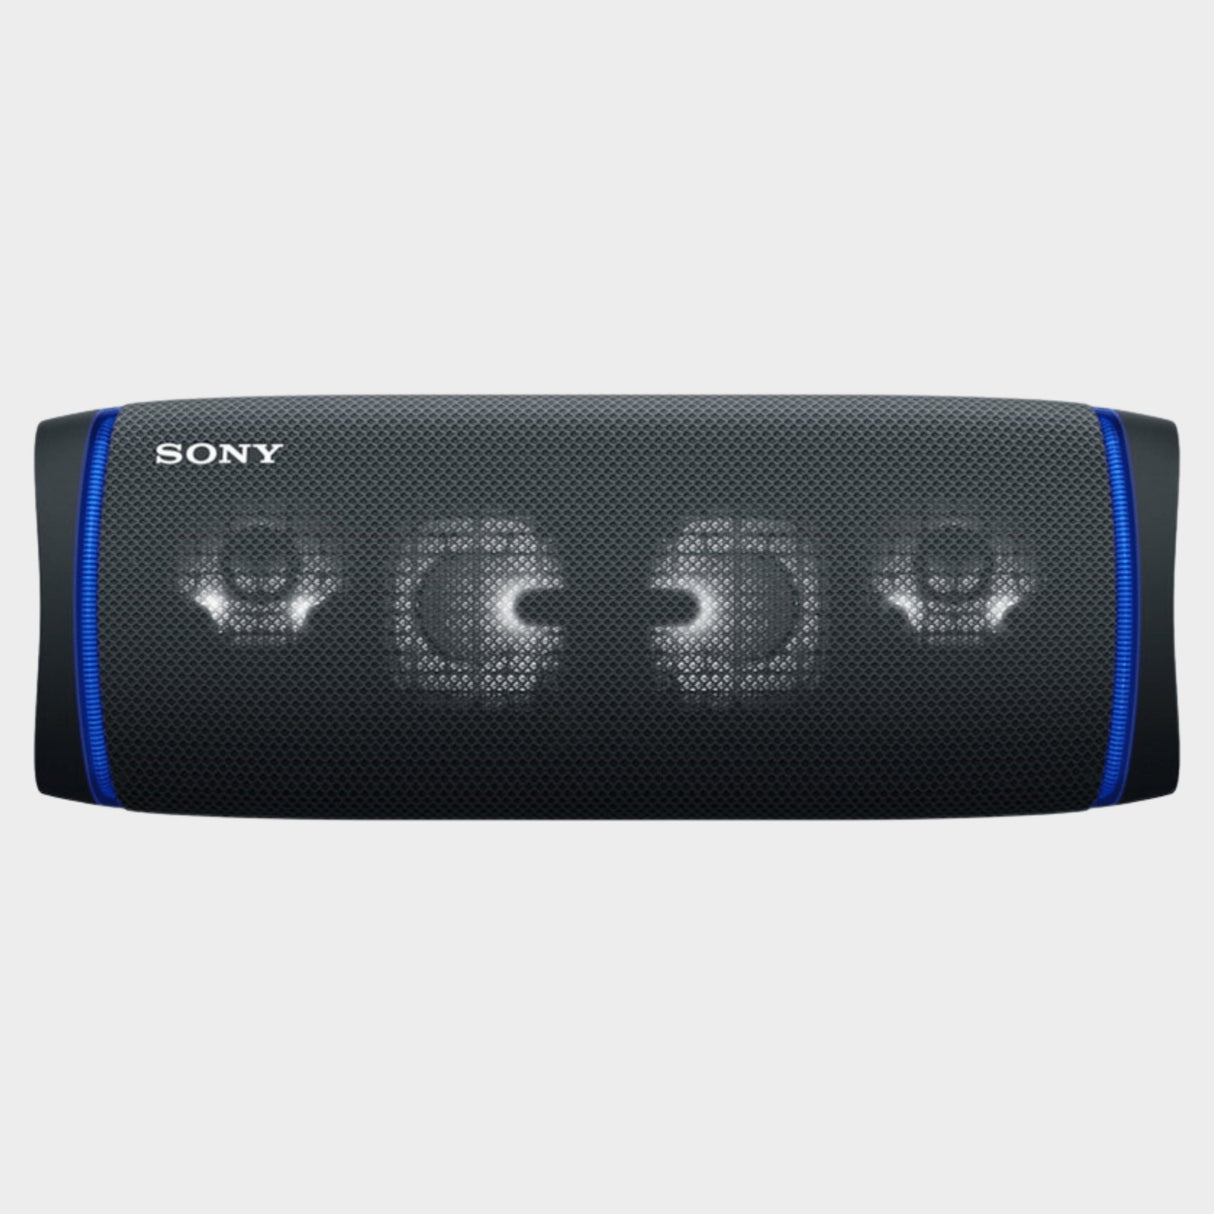 Sony Extra Bass Portable Wireless Speaker SRSXB43 - Black - KWT Tech Mart